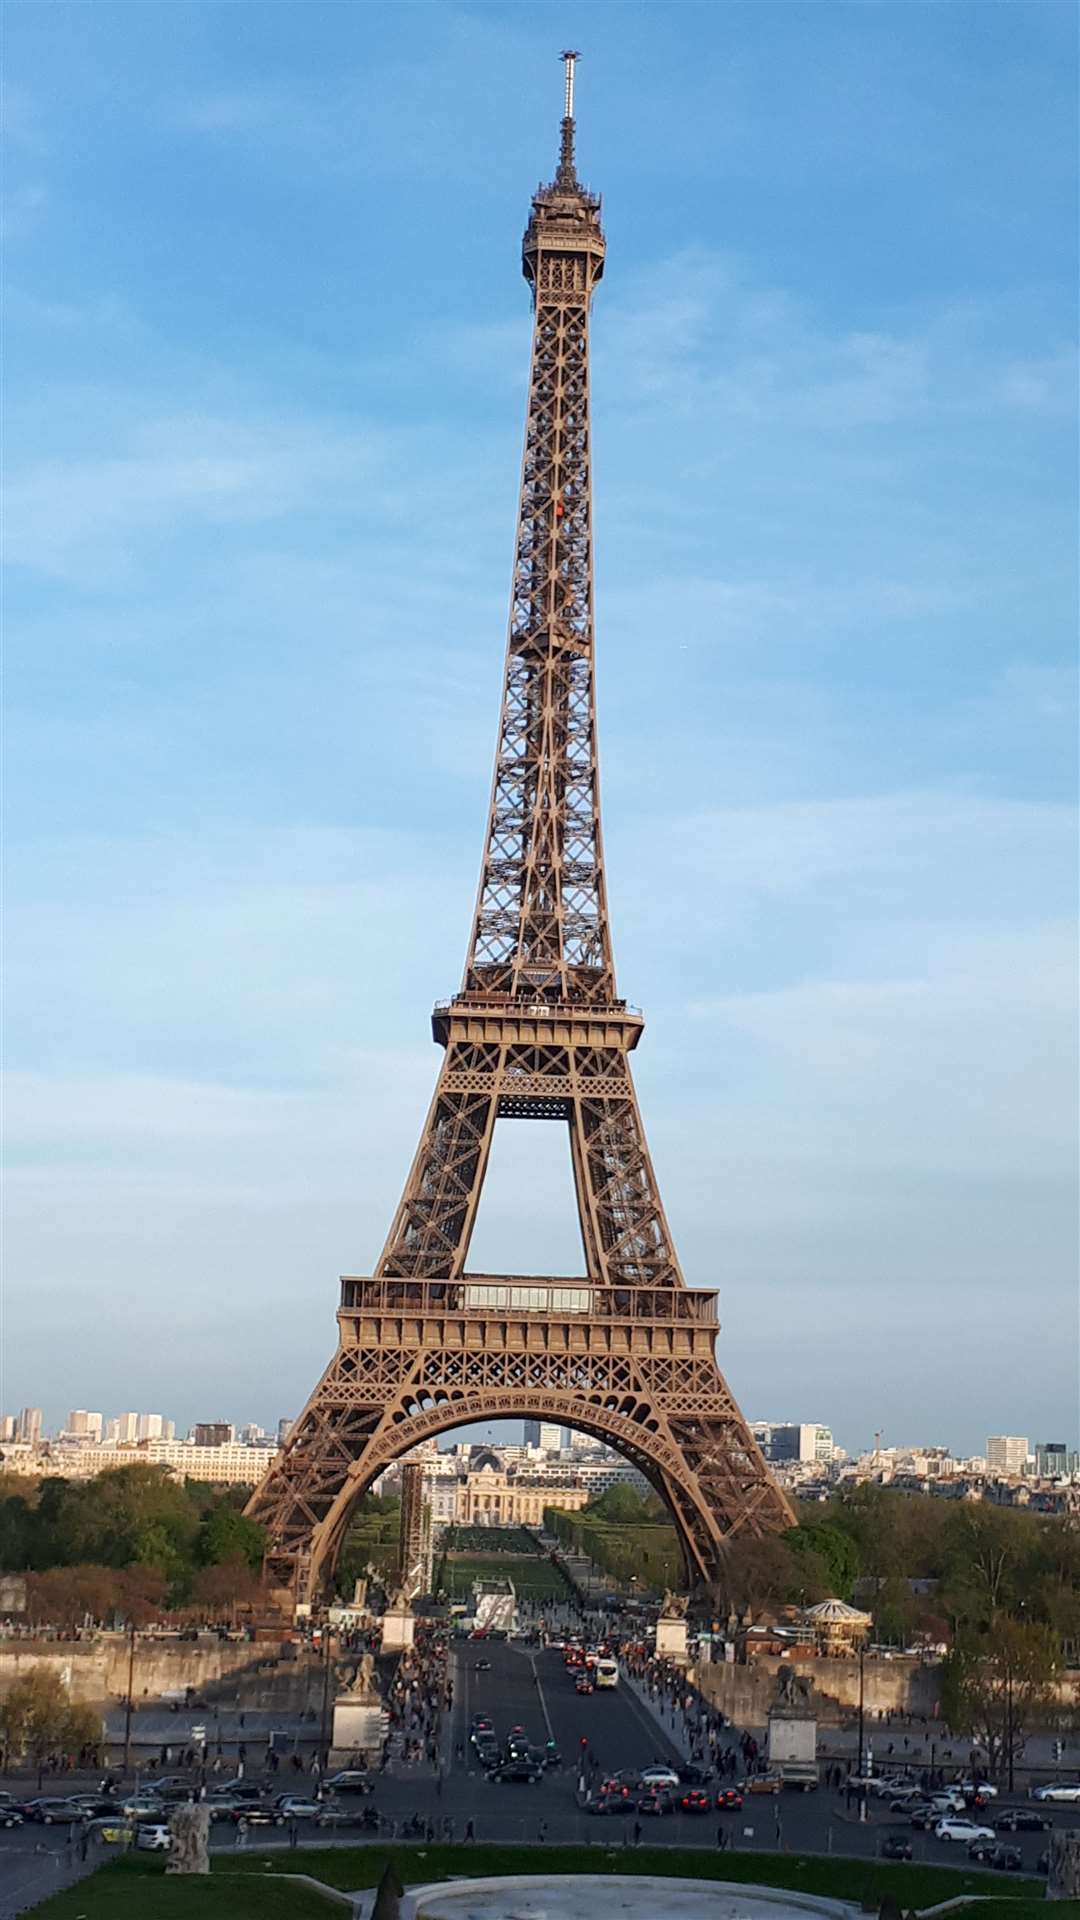 Filip's fundraiser saw him climb the Eiffel Tower.